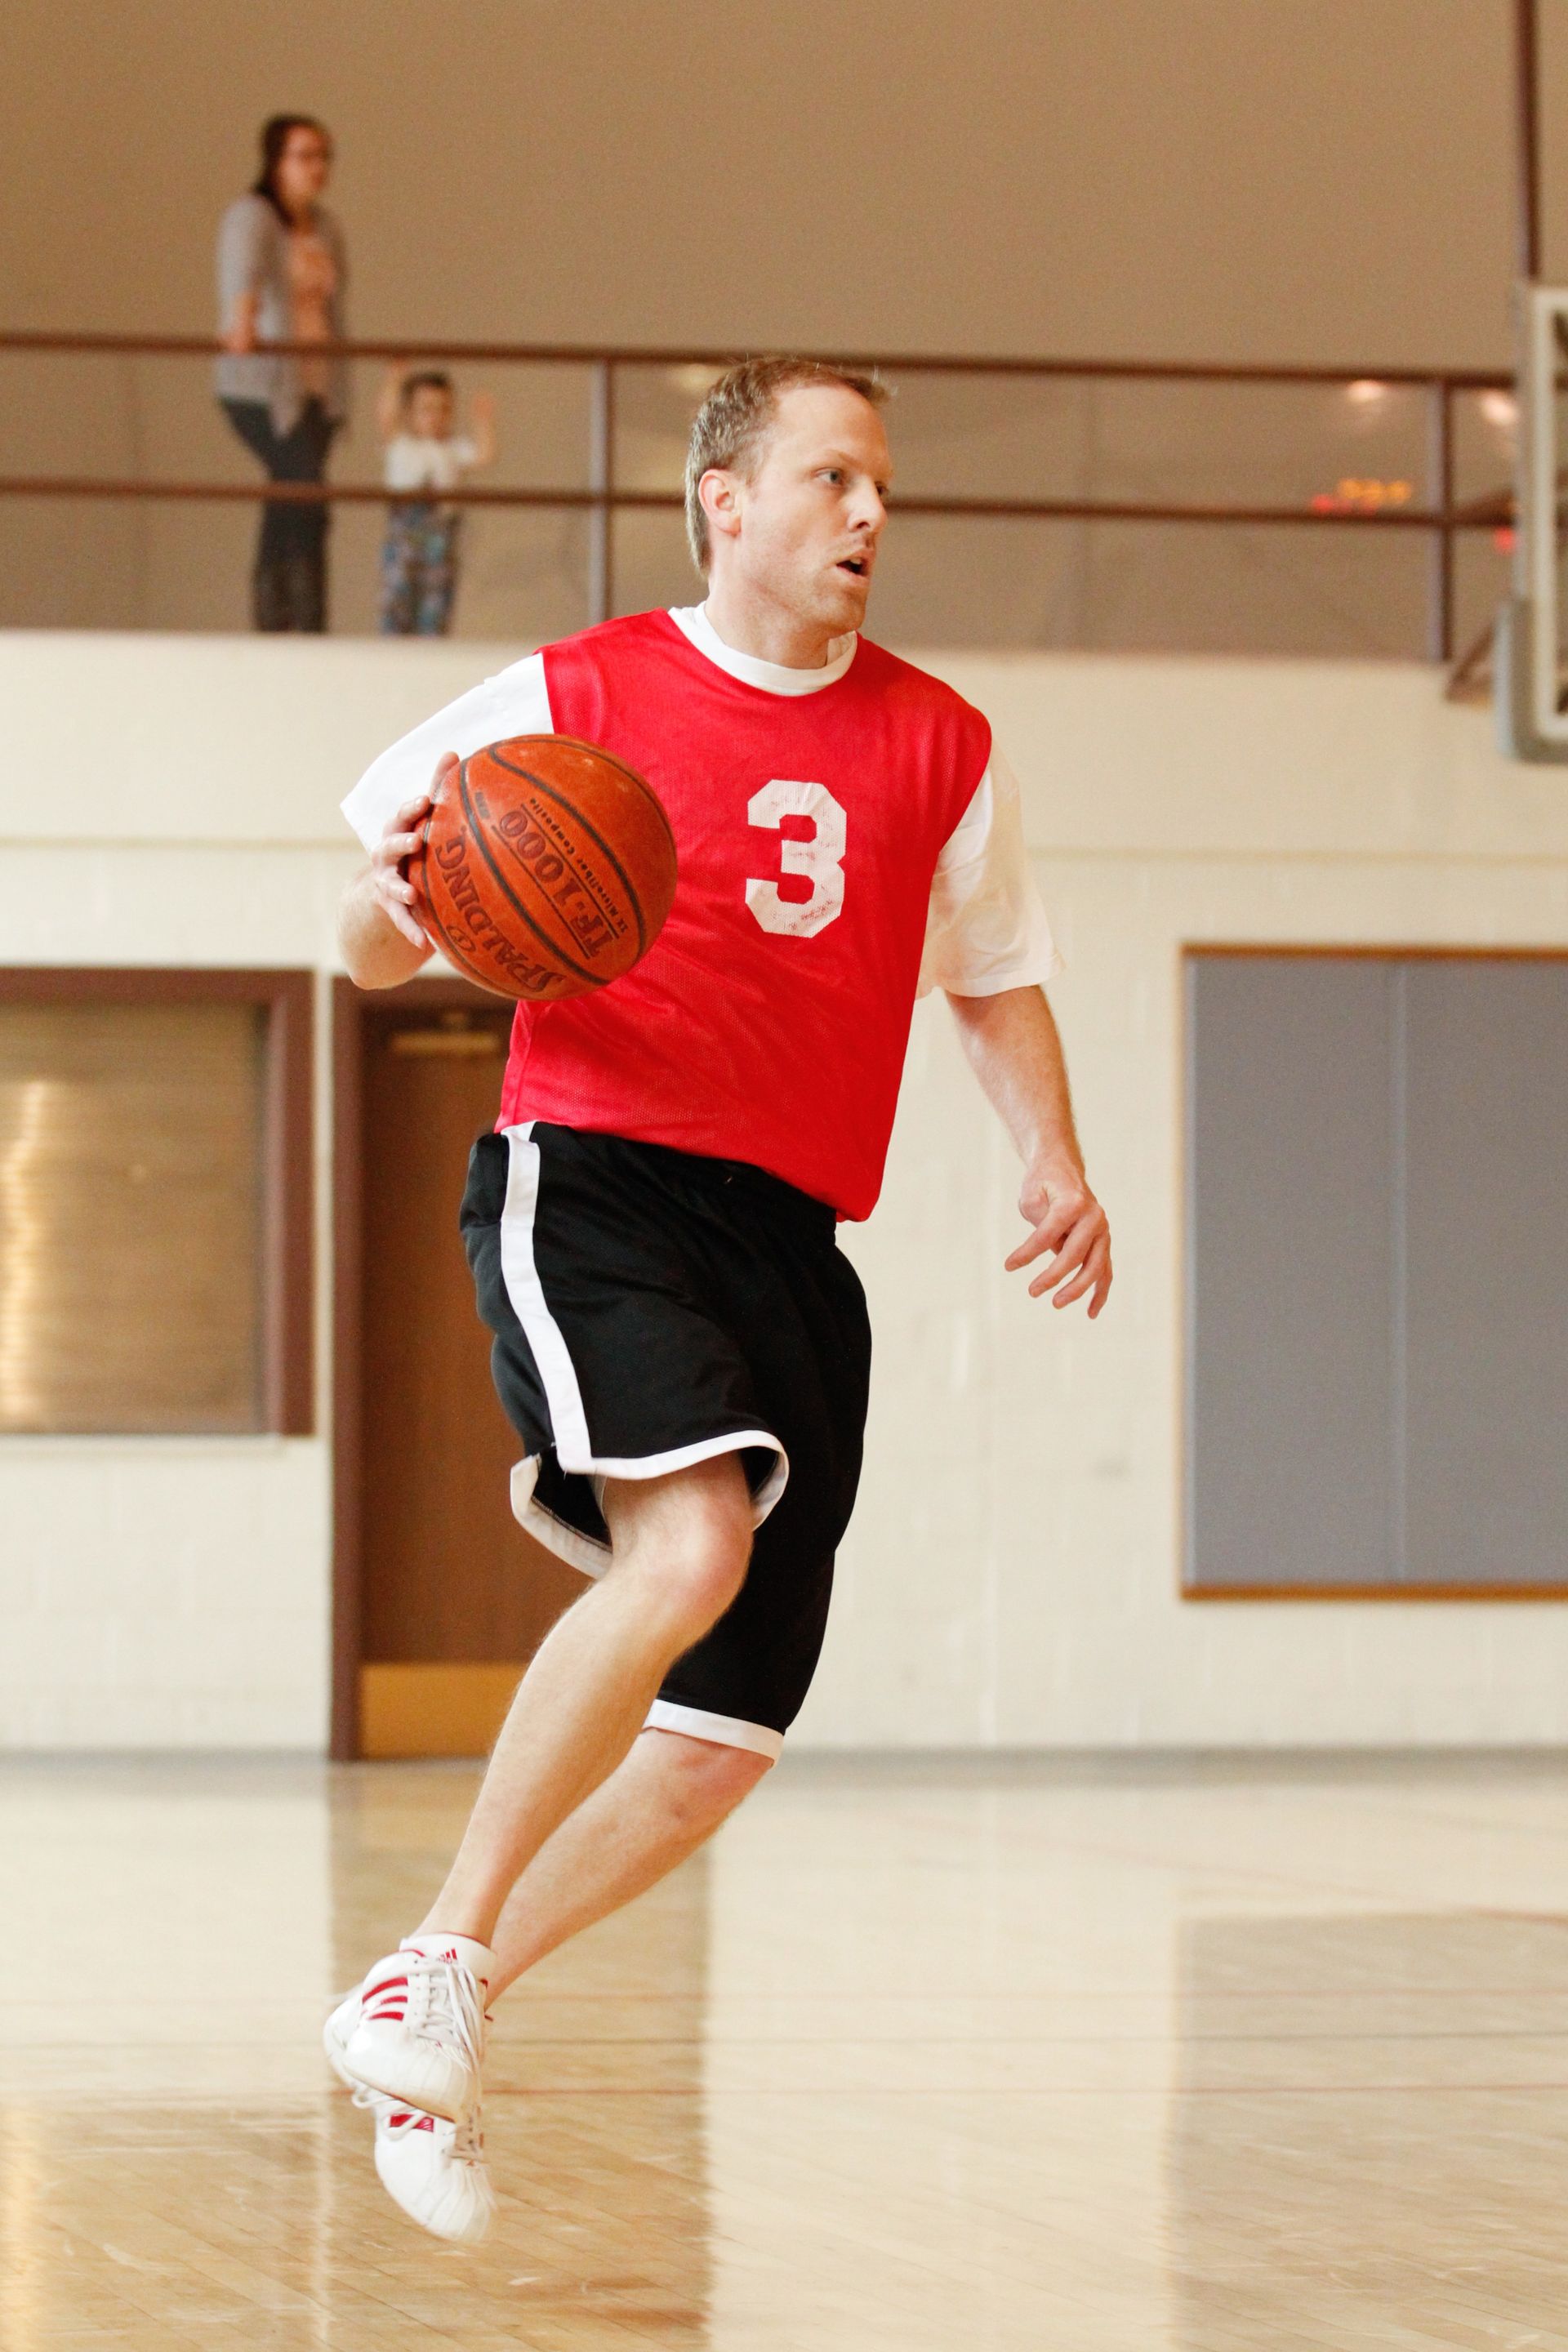 A man plays basketball in a church gym.